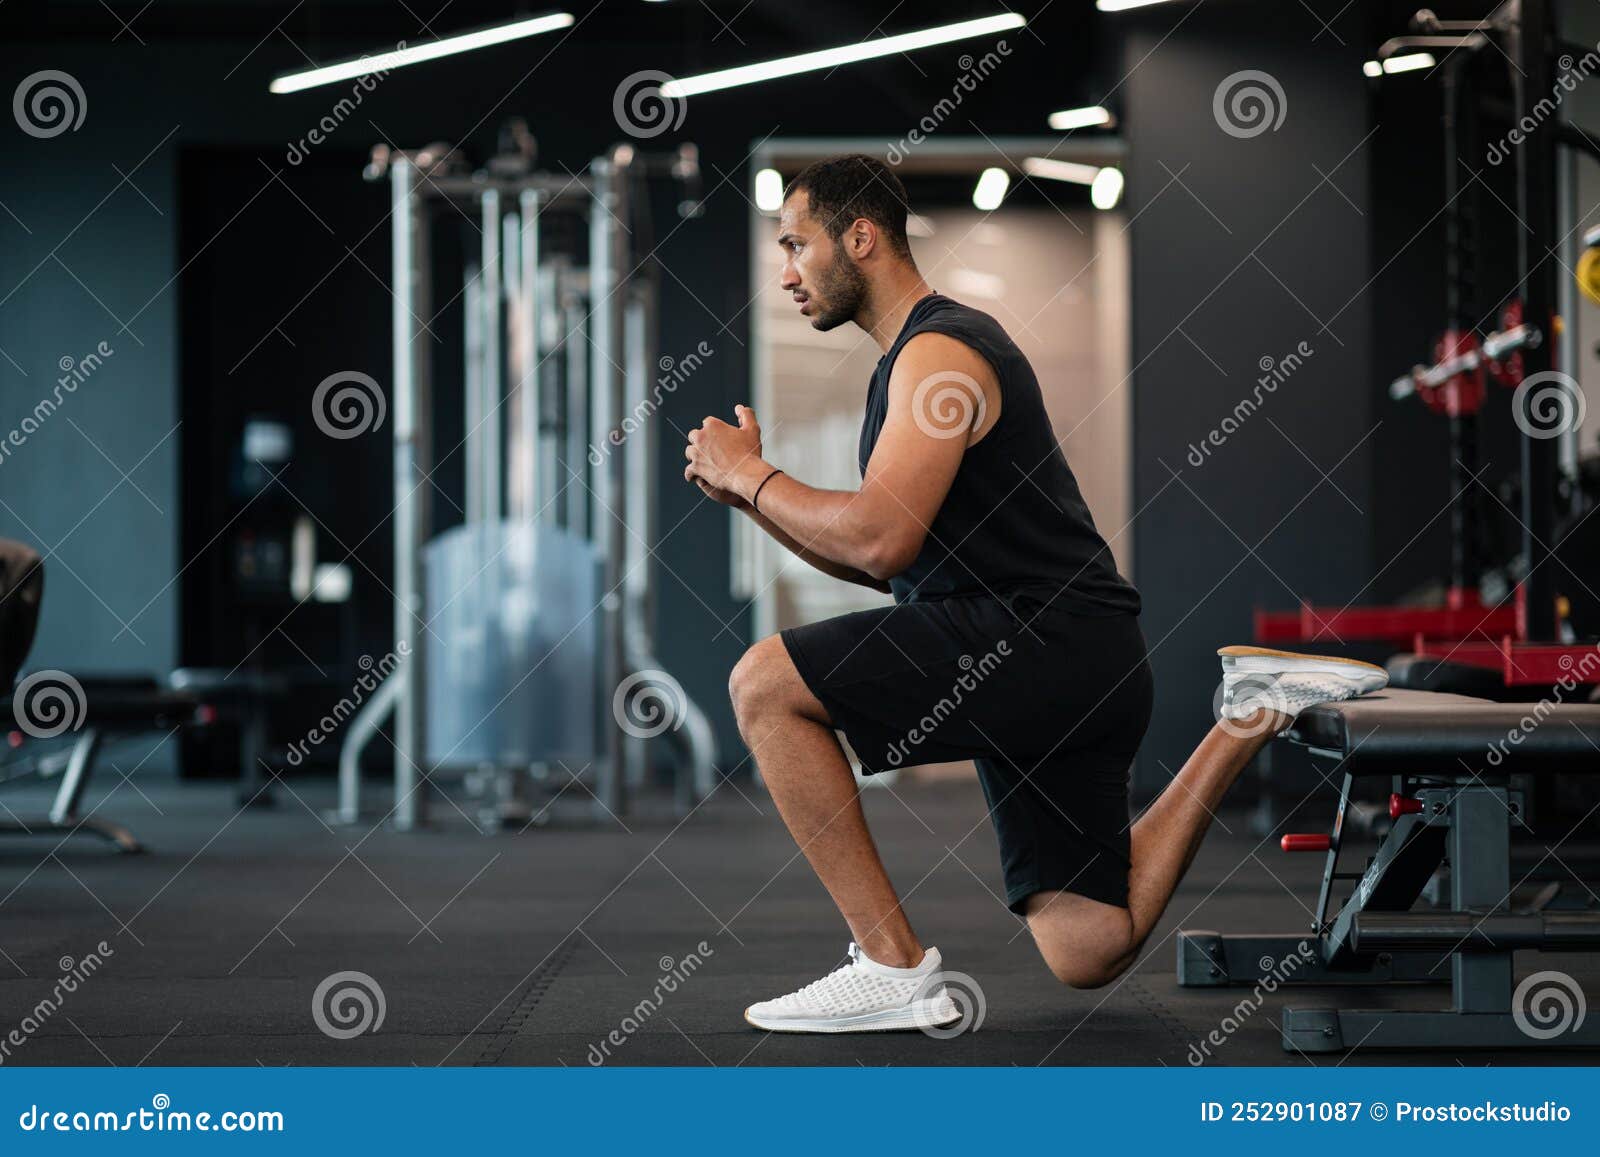 portrait of athletic black man making bulgarian split squat exercise at gym